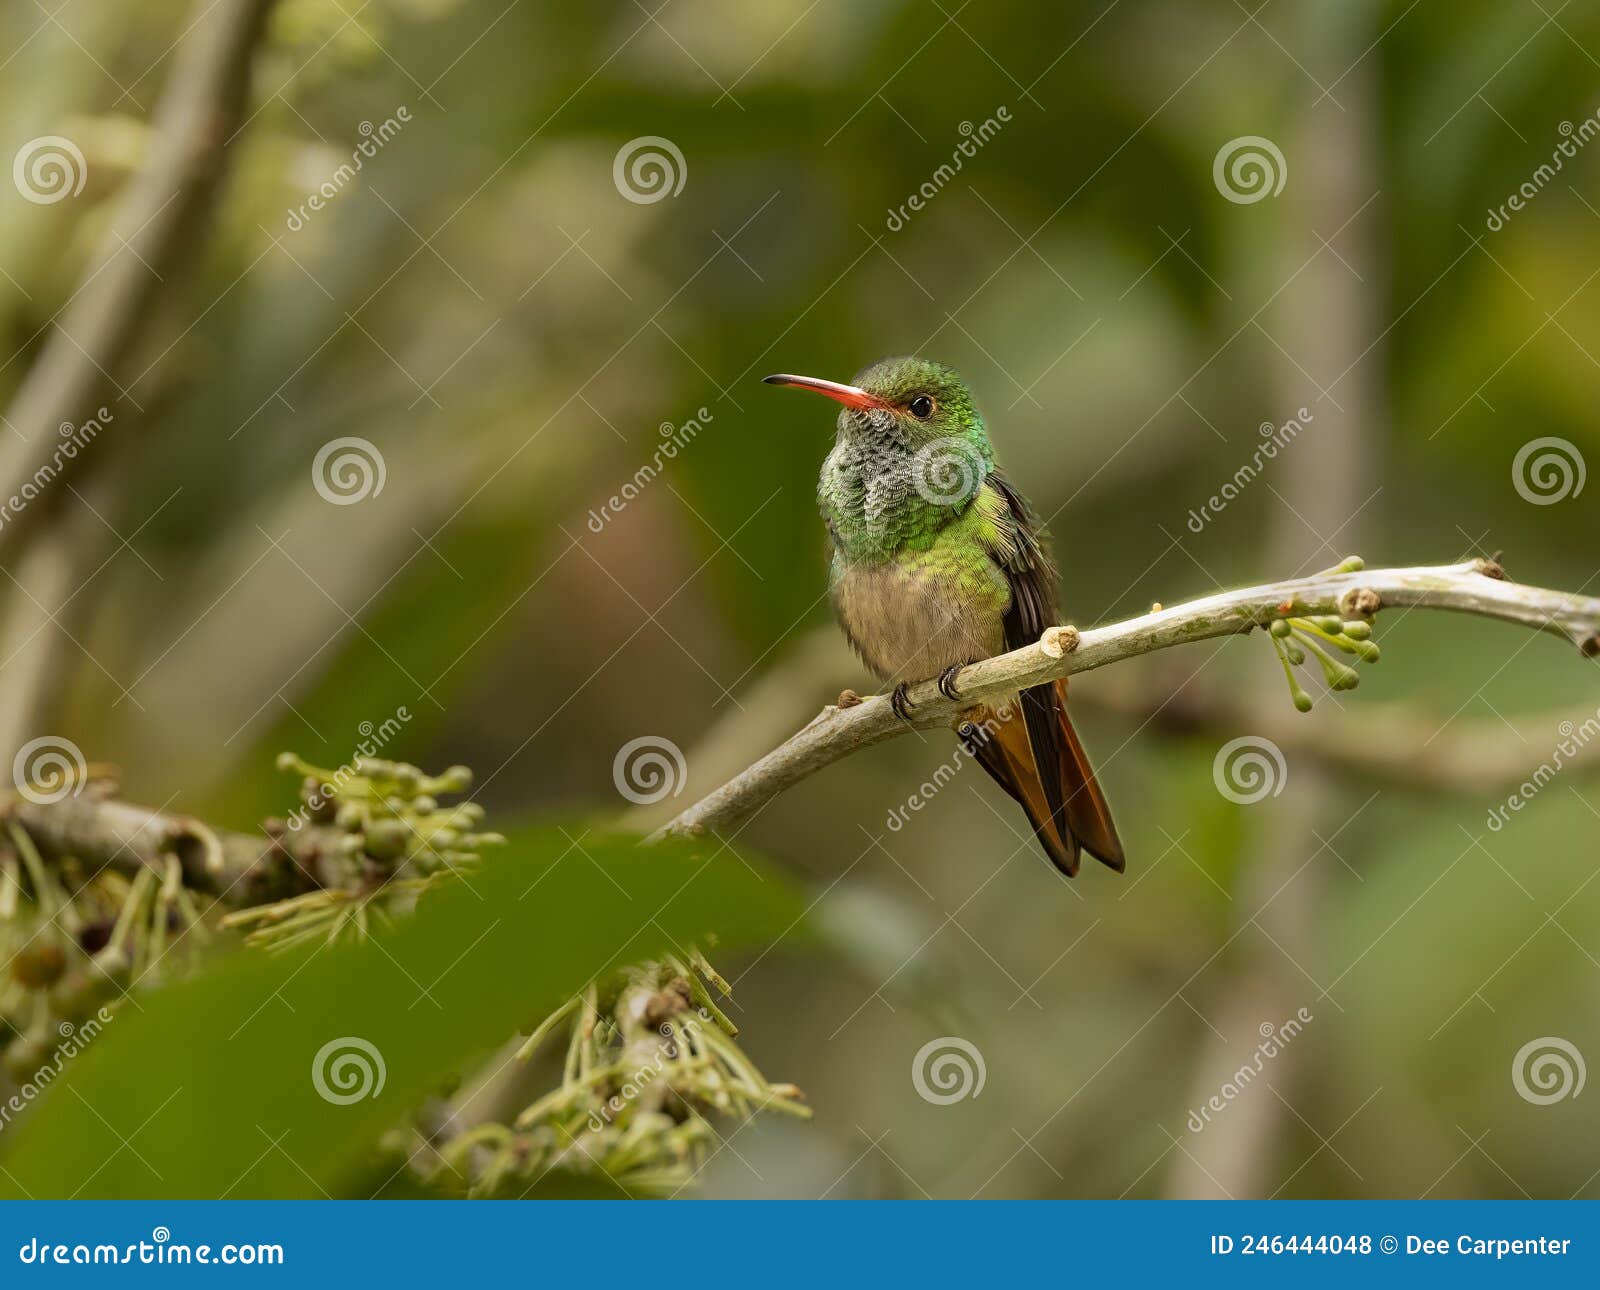 a rufous-tailed hummingbird in ecuador